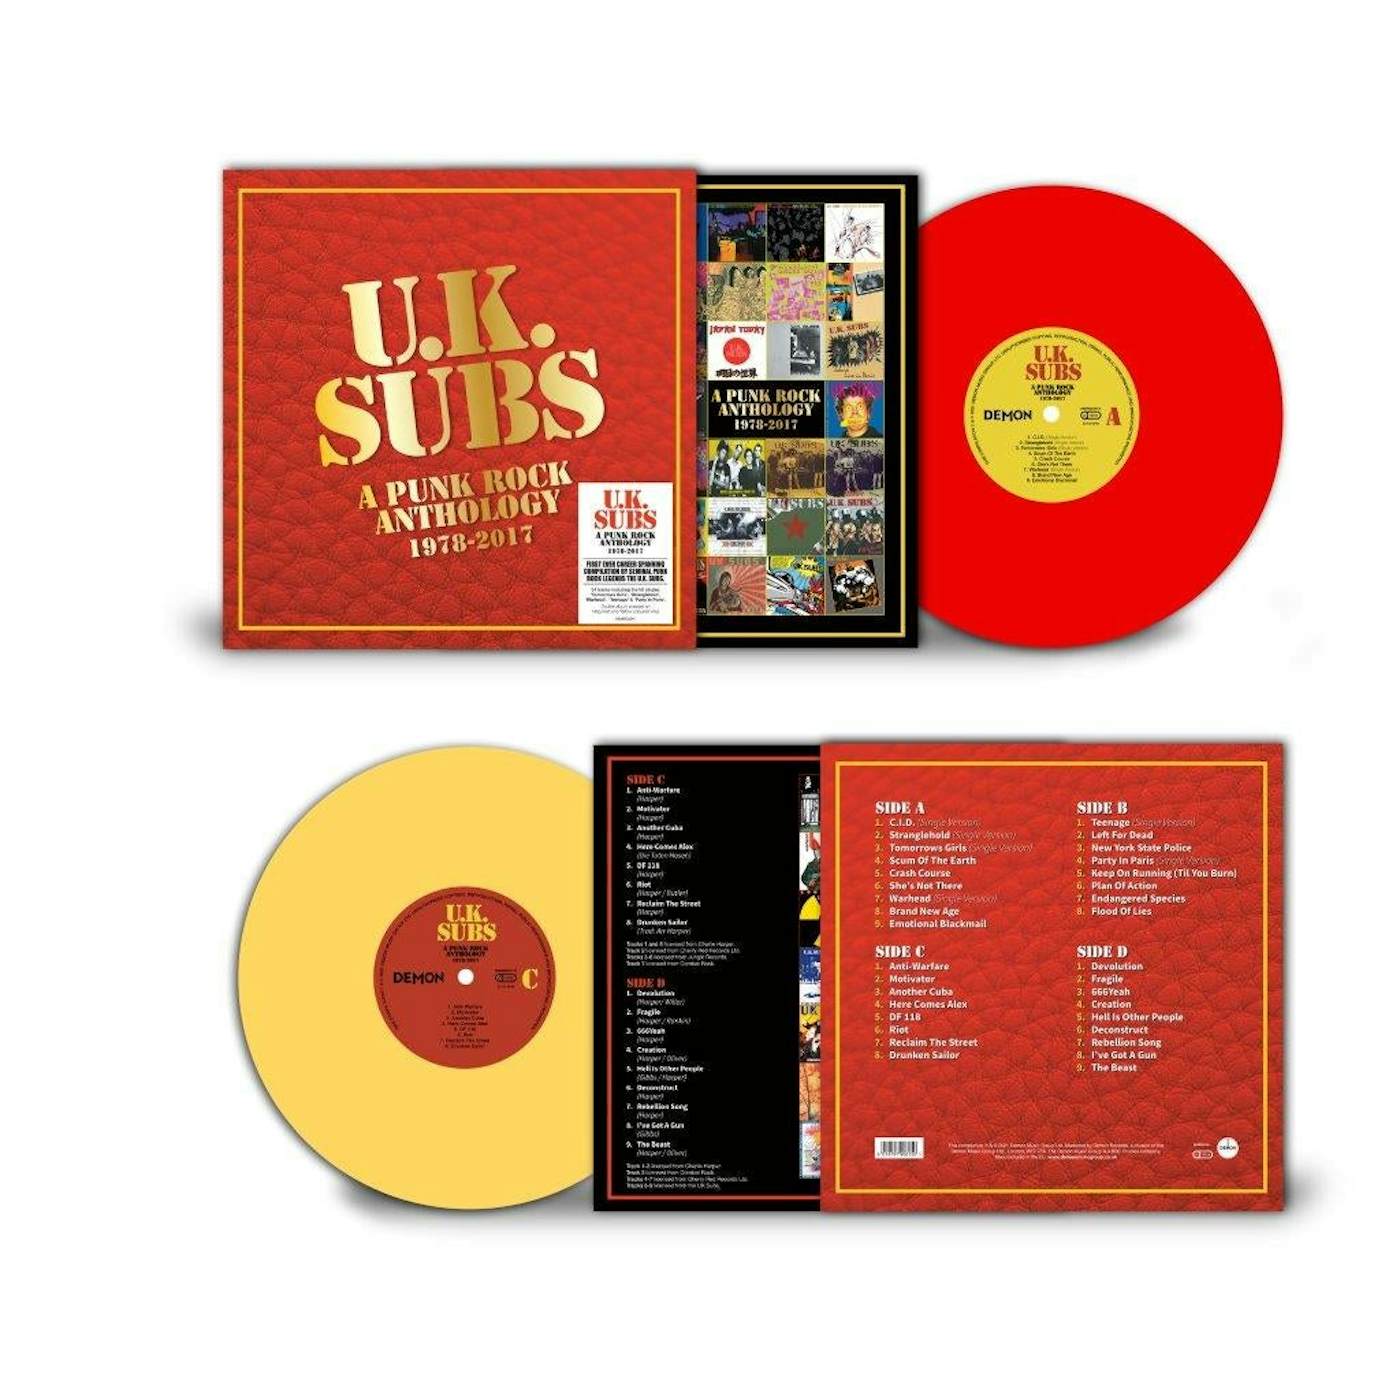 U.K. Subs LP Vinyl Record - A Punk Rock Anthology - 19 78-20. 17  (Red/Yellow Vinyl)